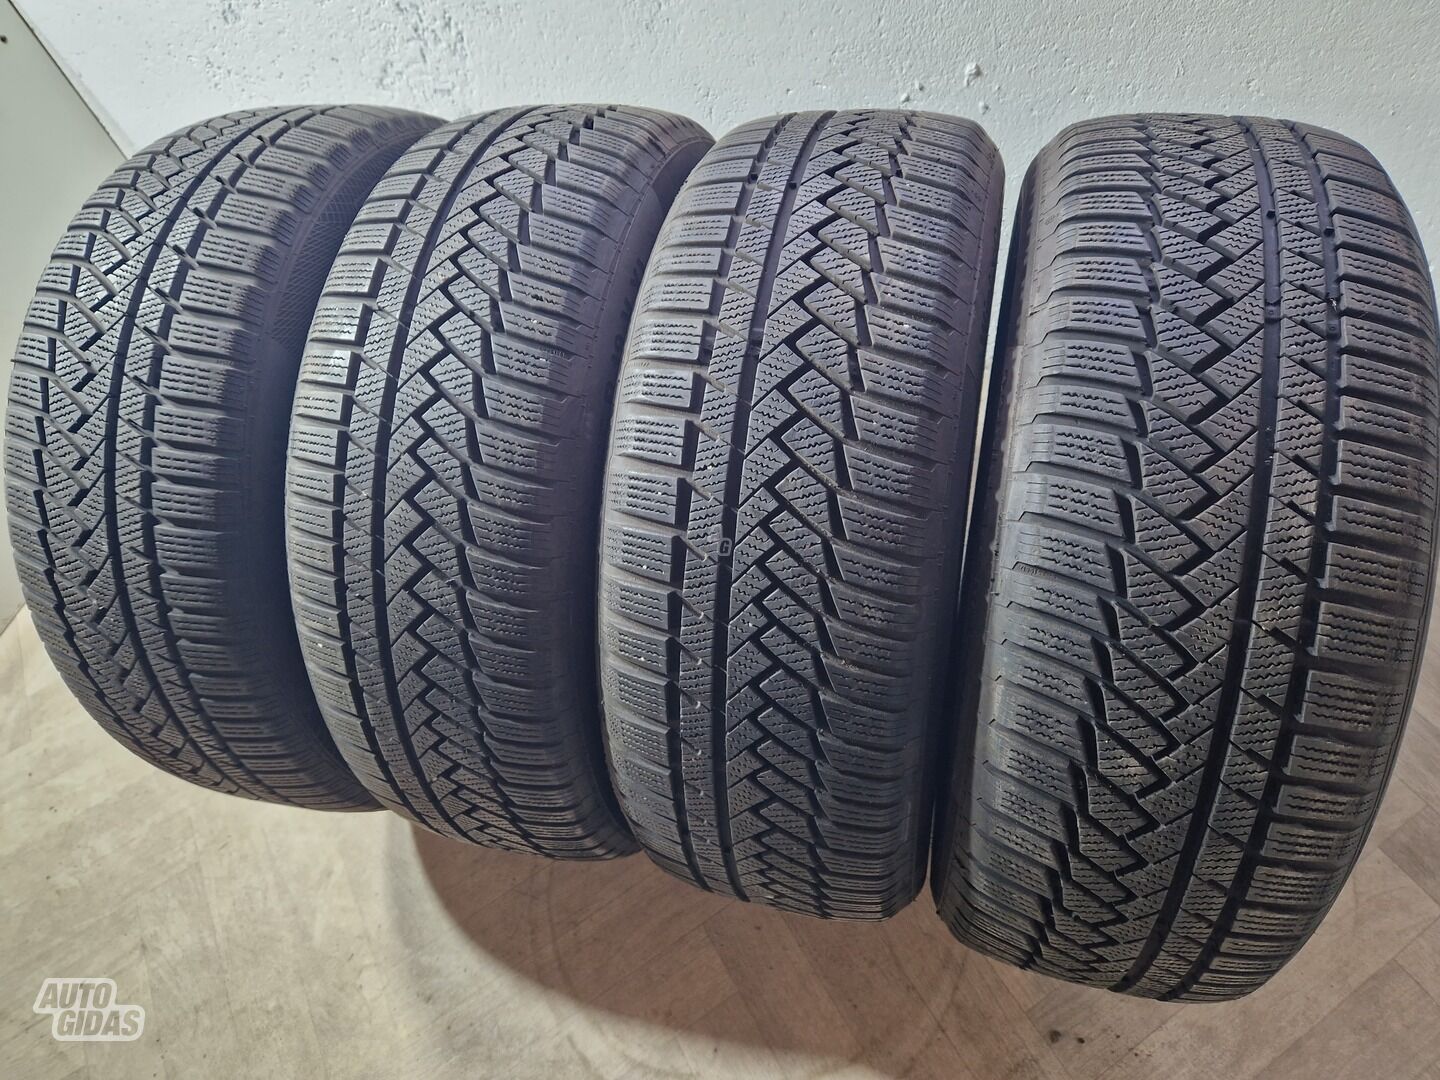 Continental 7-8mm, 2019m R18 winter tyres passanger car